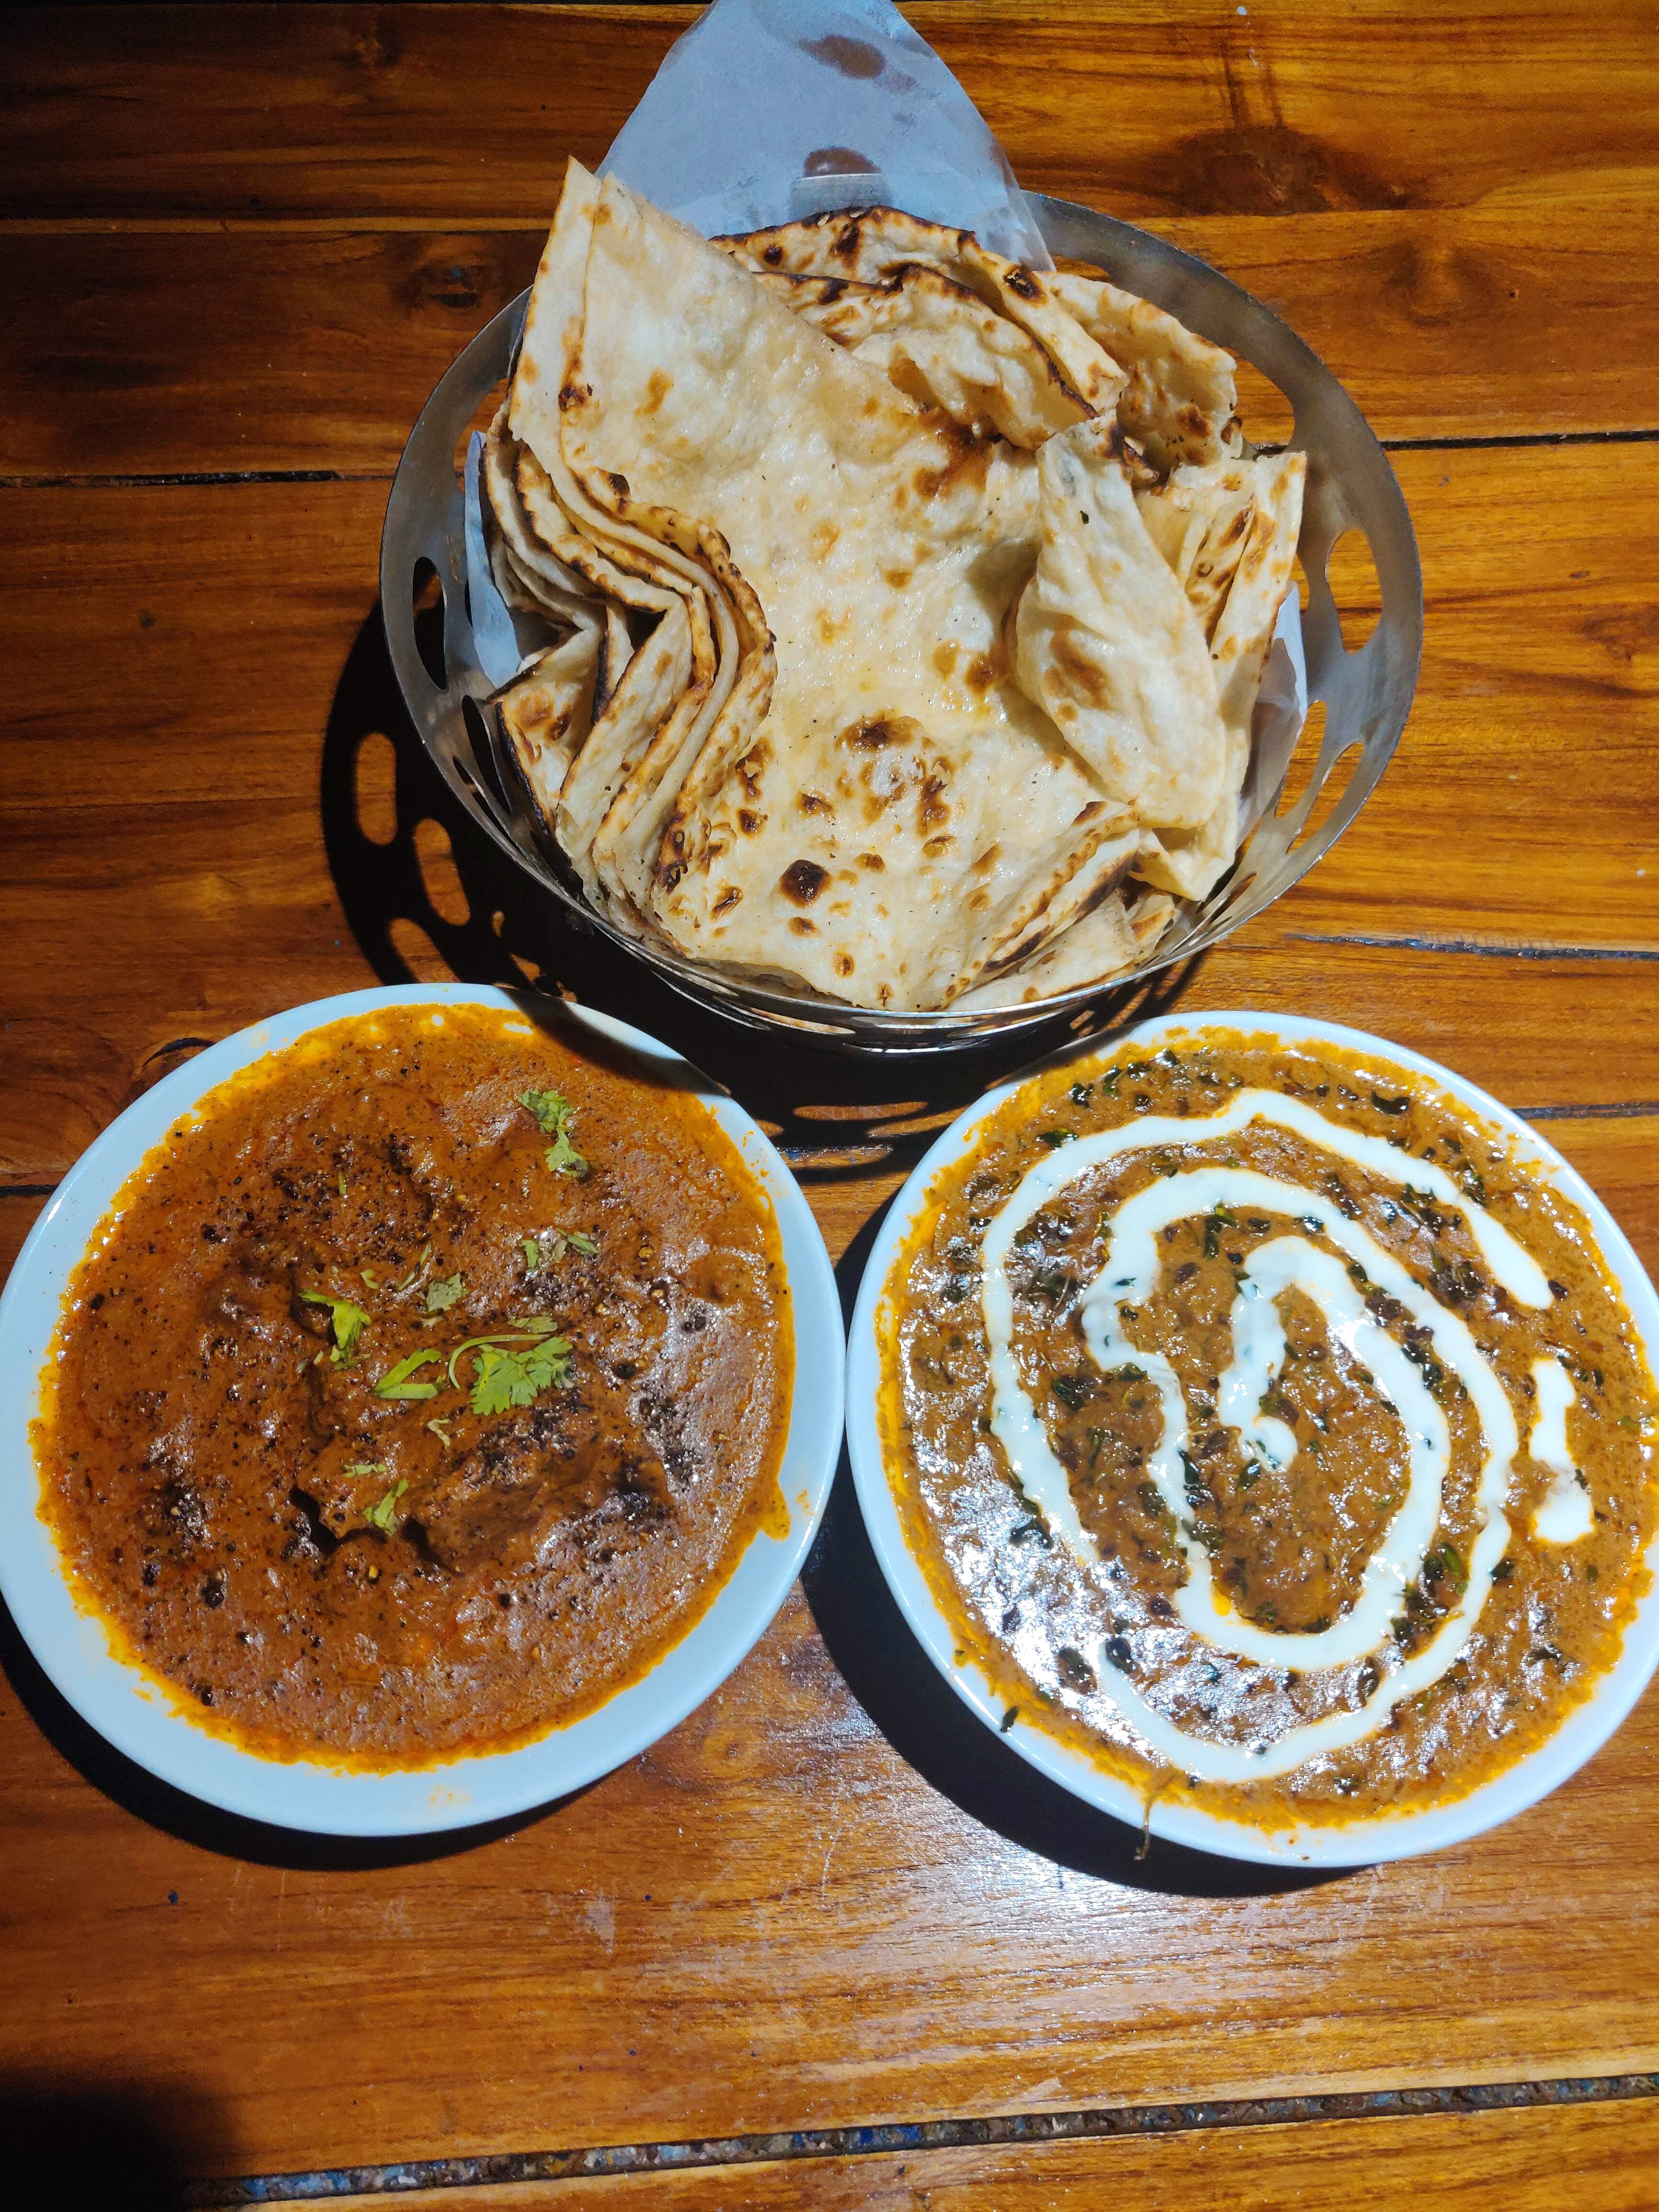 Dish,Food,Cuisine,Ingredient,Naan,Roti,Roti prata,Produce,Punjabi cuisine,Indian cuisine